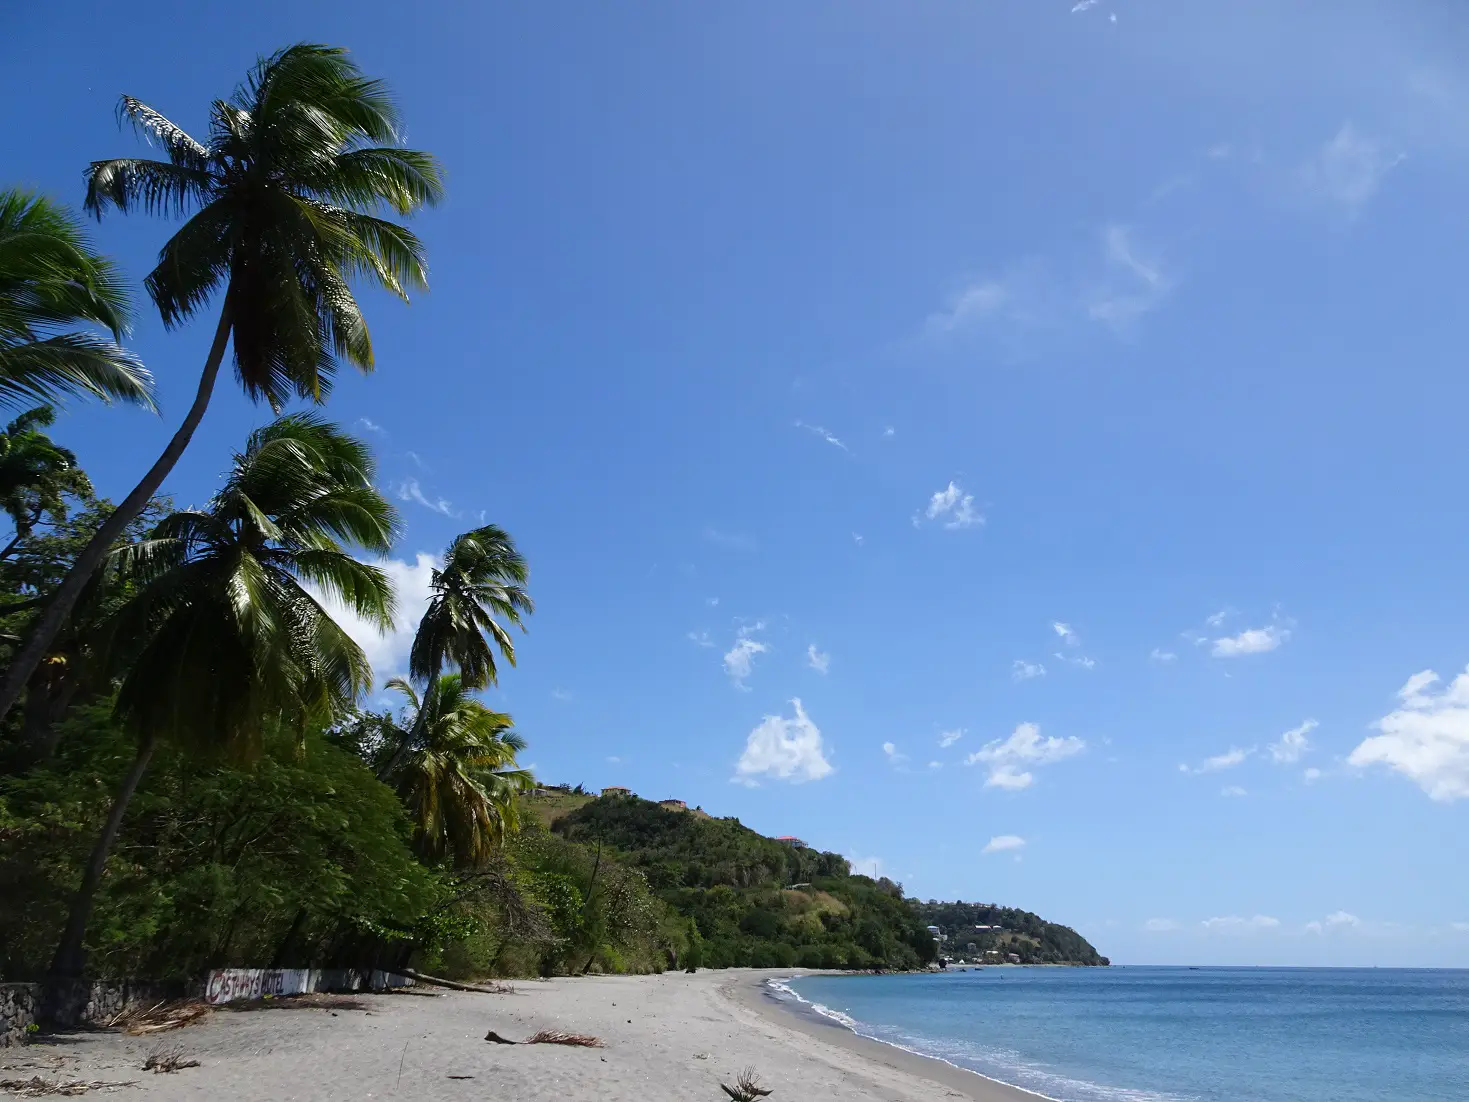 A view of Mero beach, a long black sand beach on Dominica